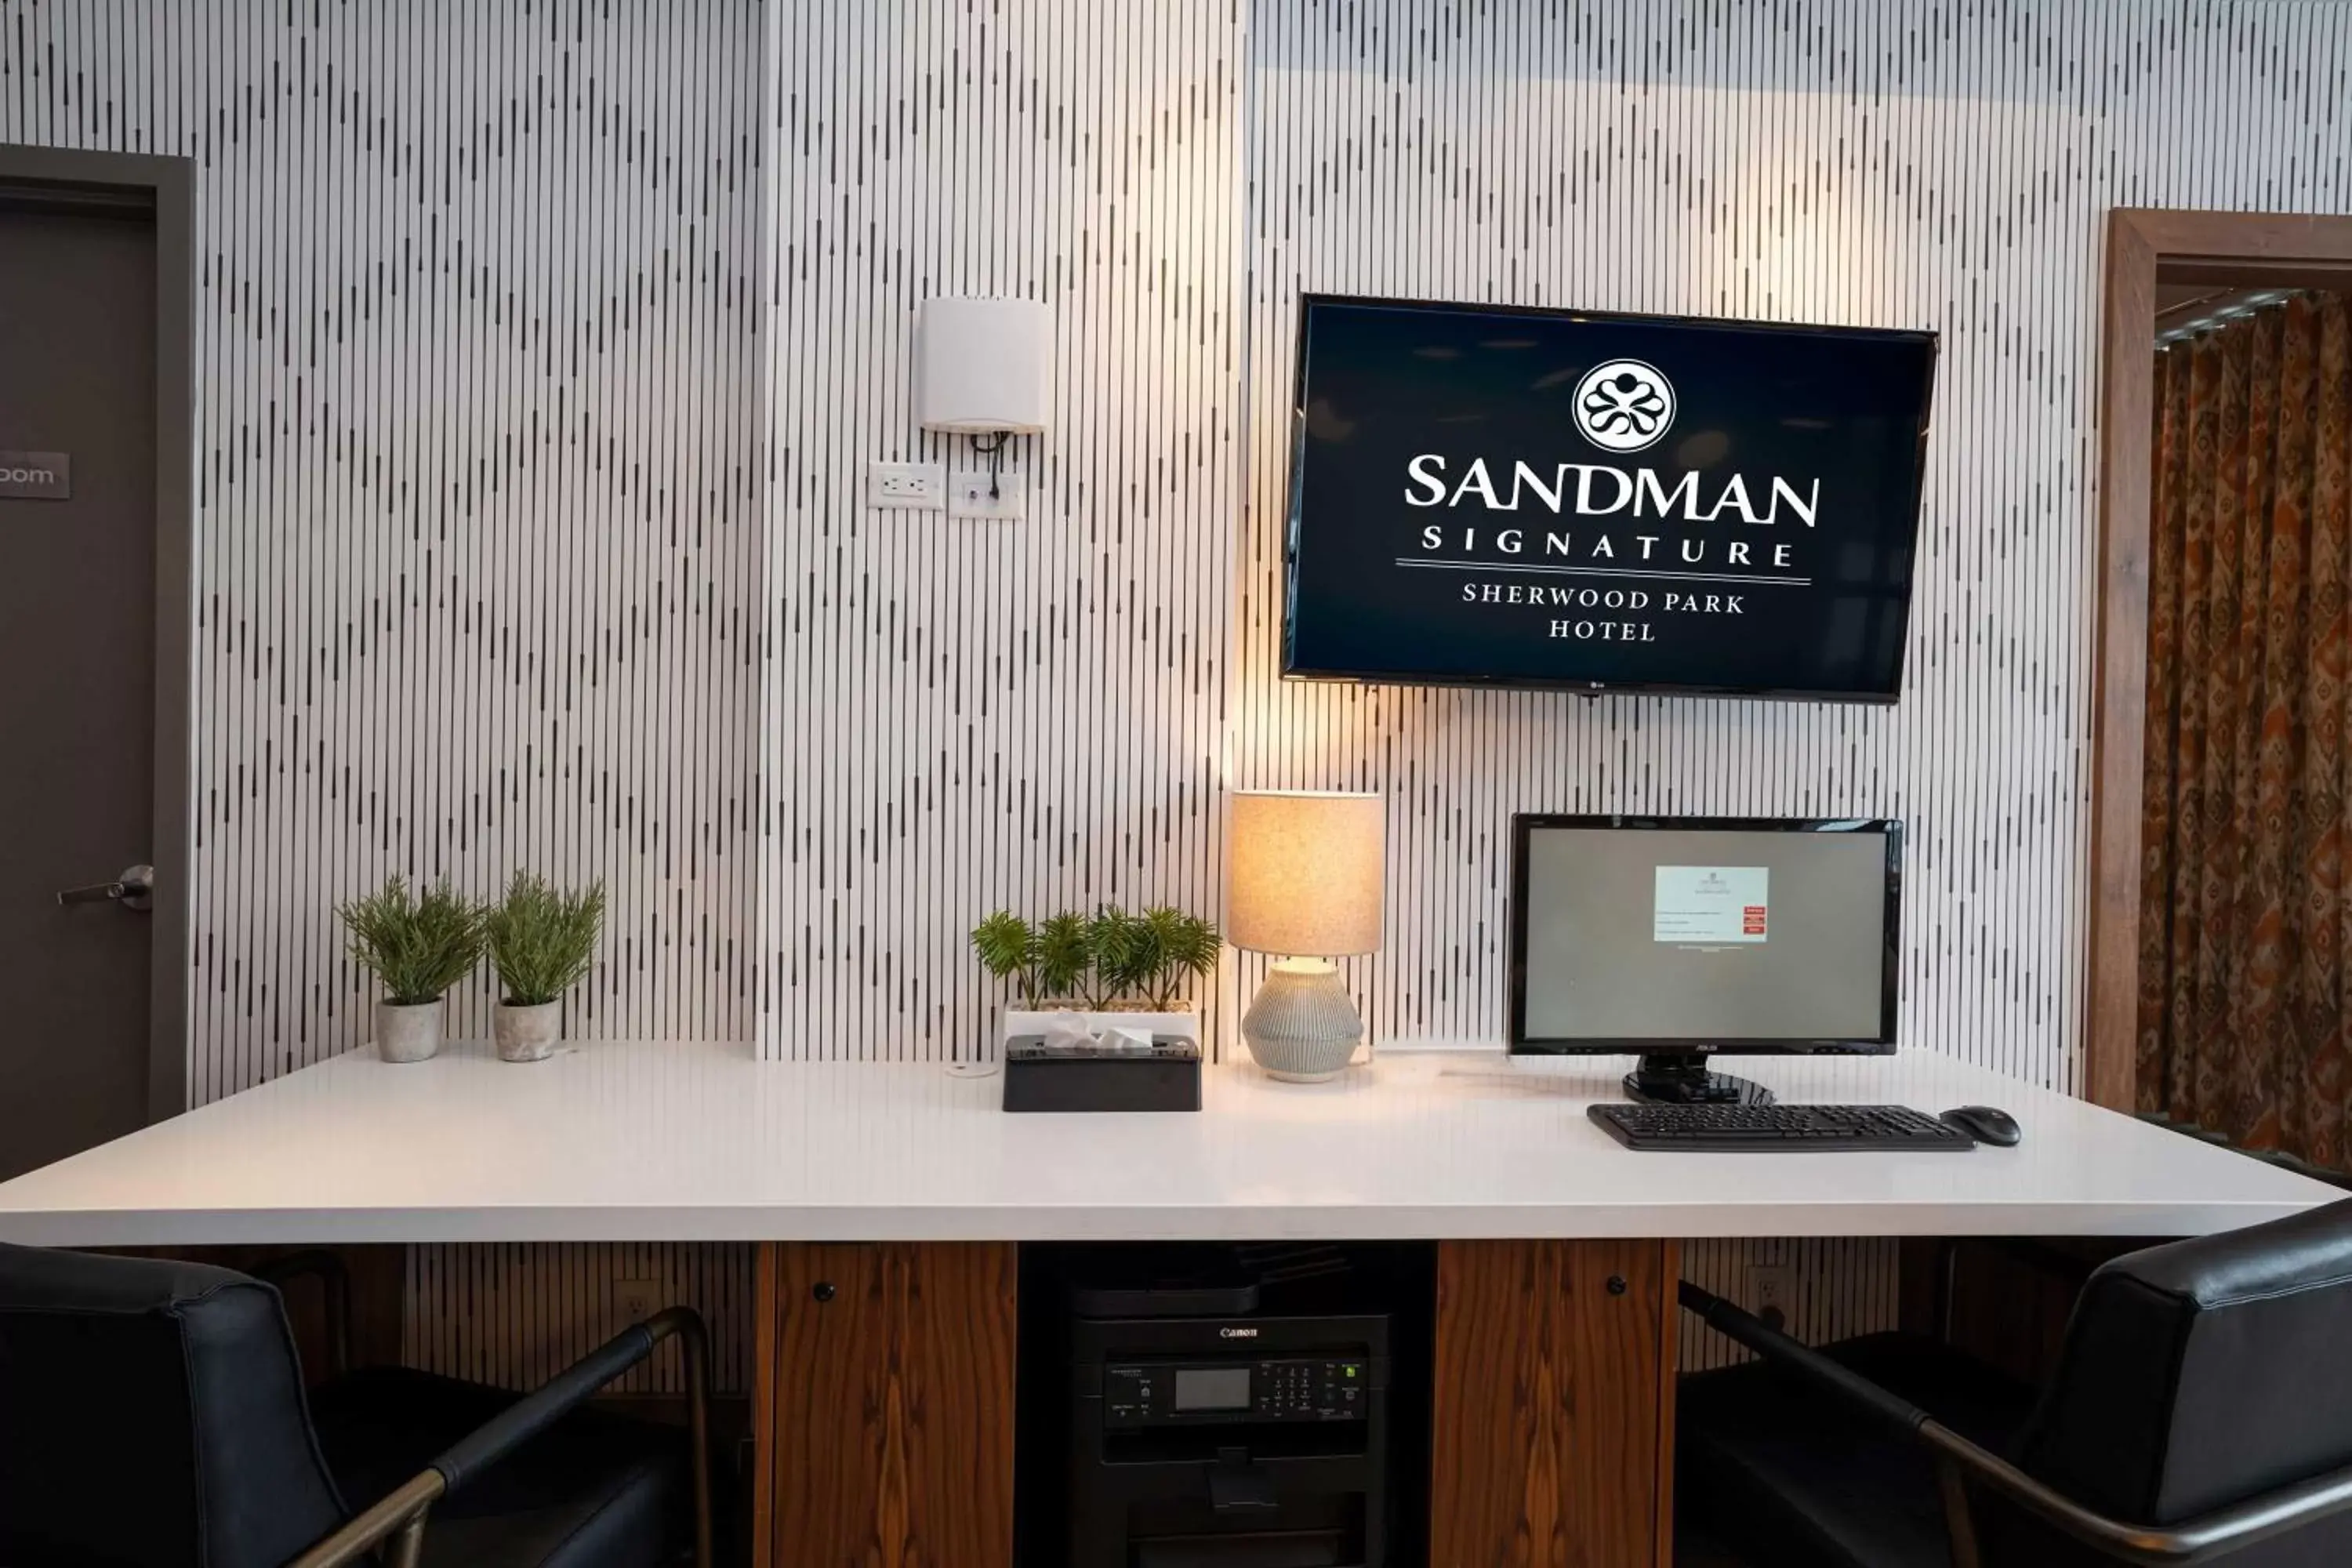 Business facilities in Sandman Signature Sherwood Park Hotel